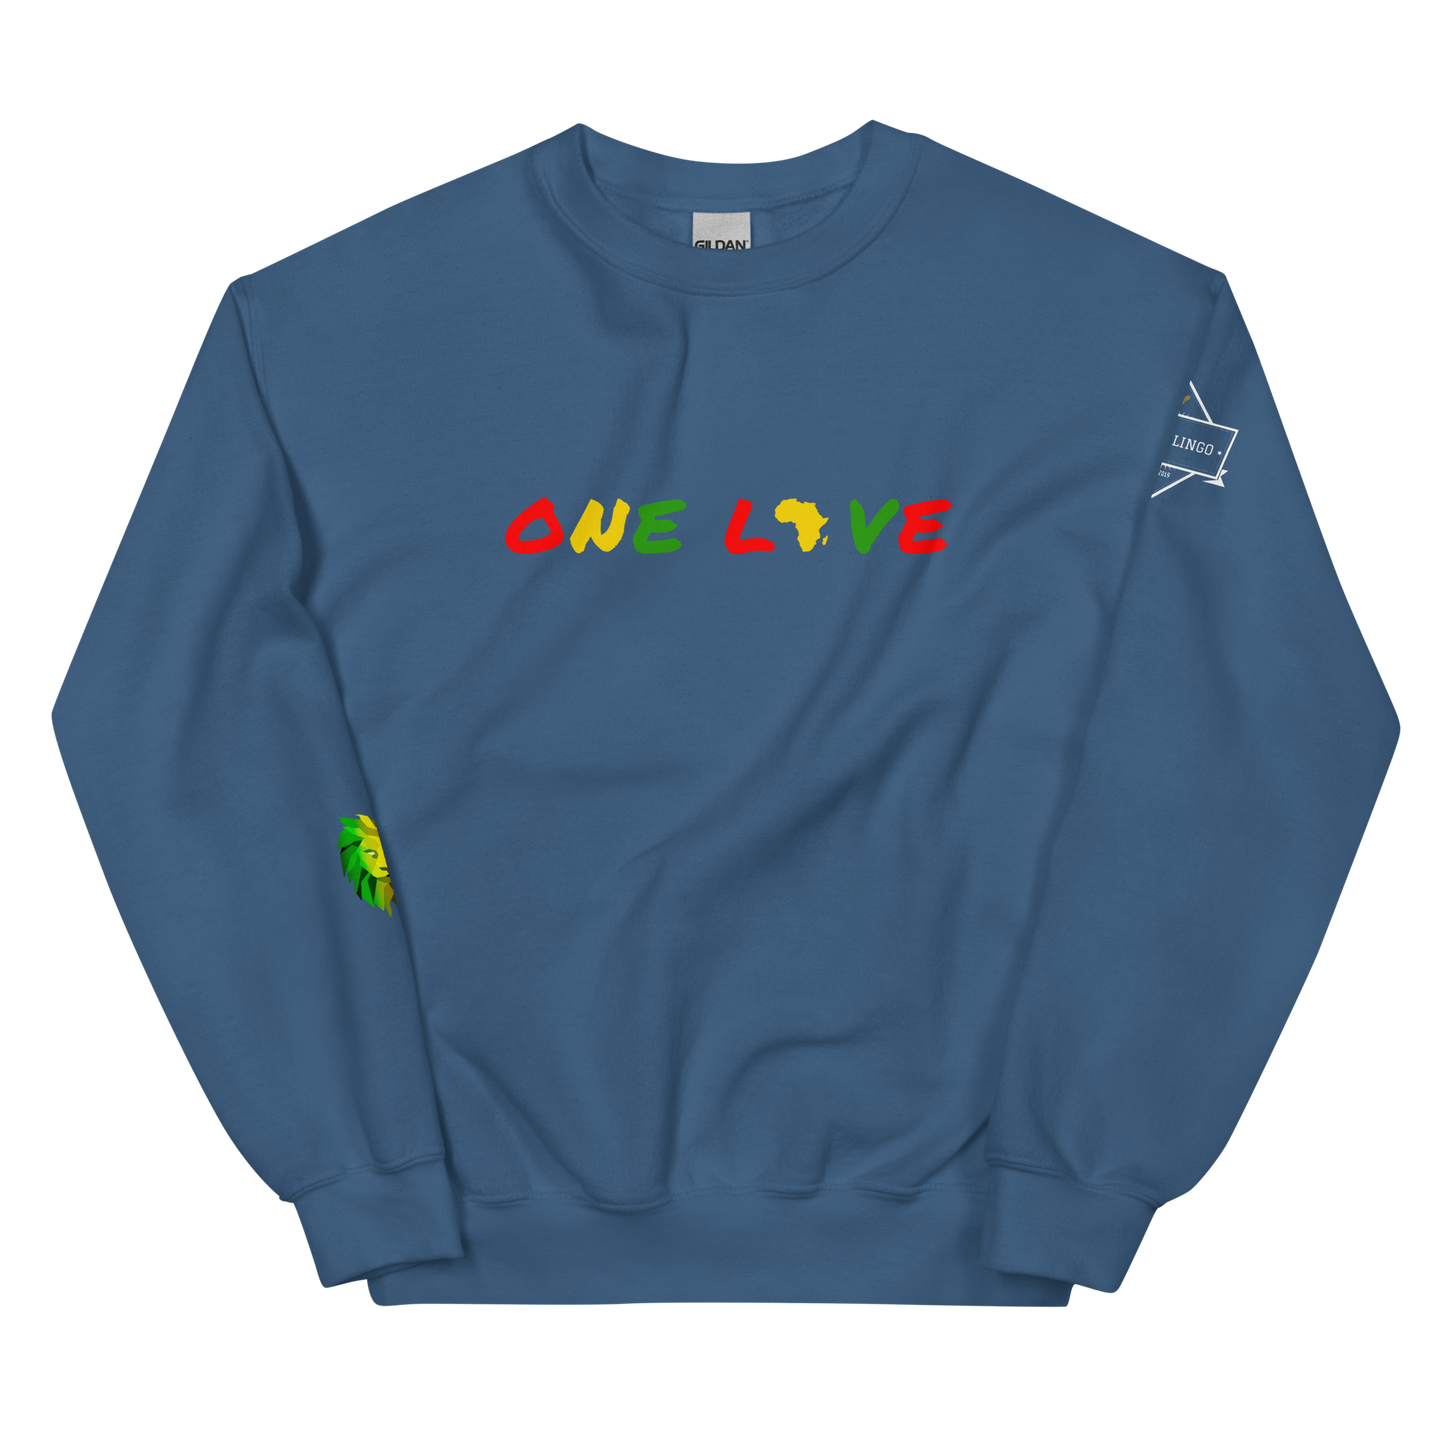 One Love Unisex Sweatshirt